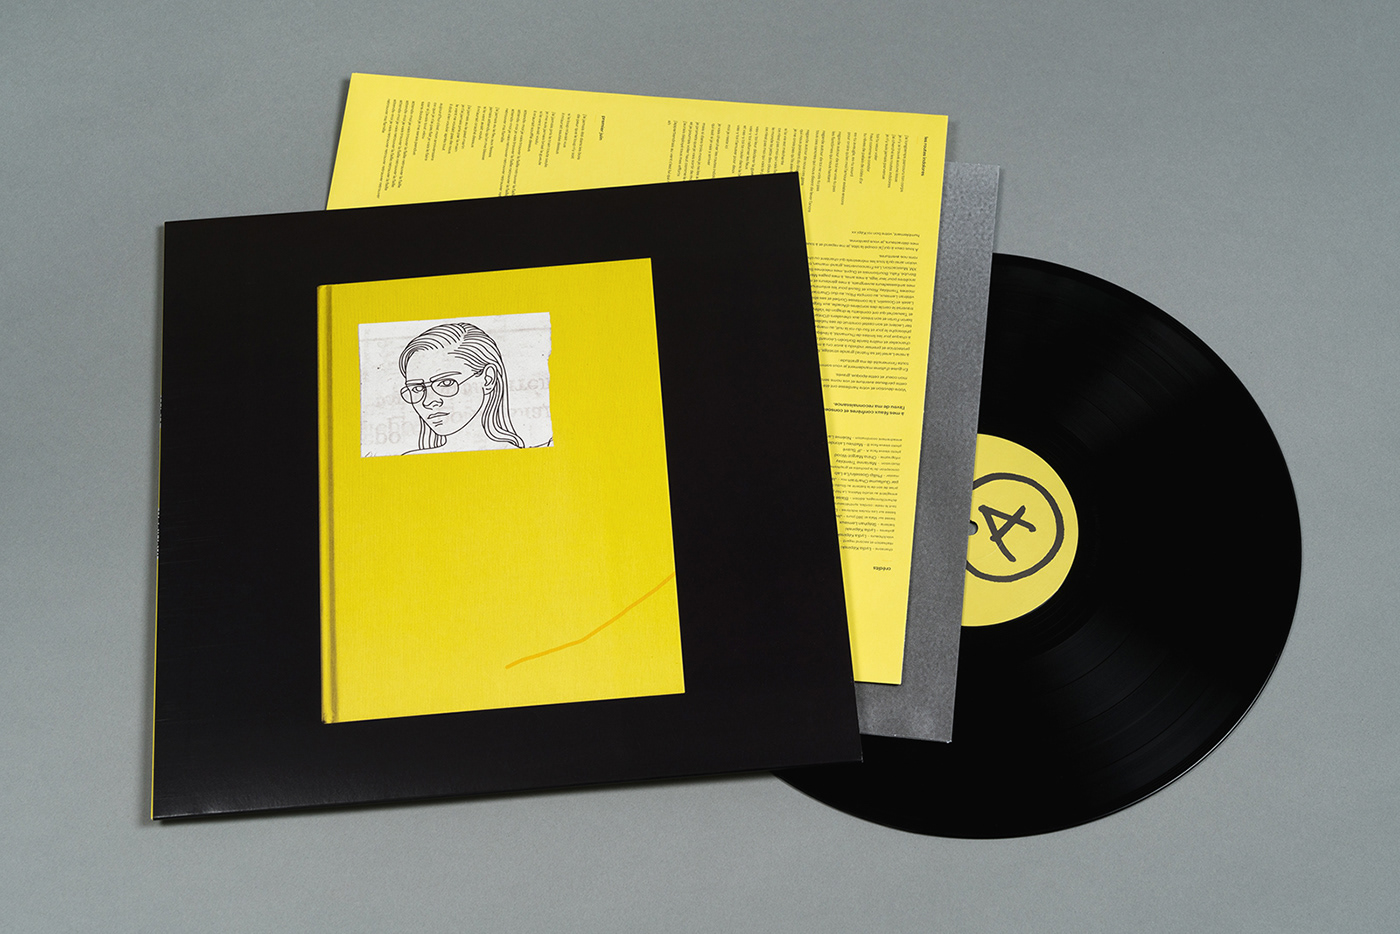 Album vinyle music Montreal albumart Zine  Booklet book yellow collage